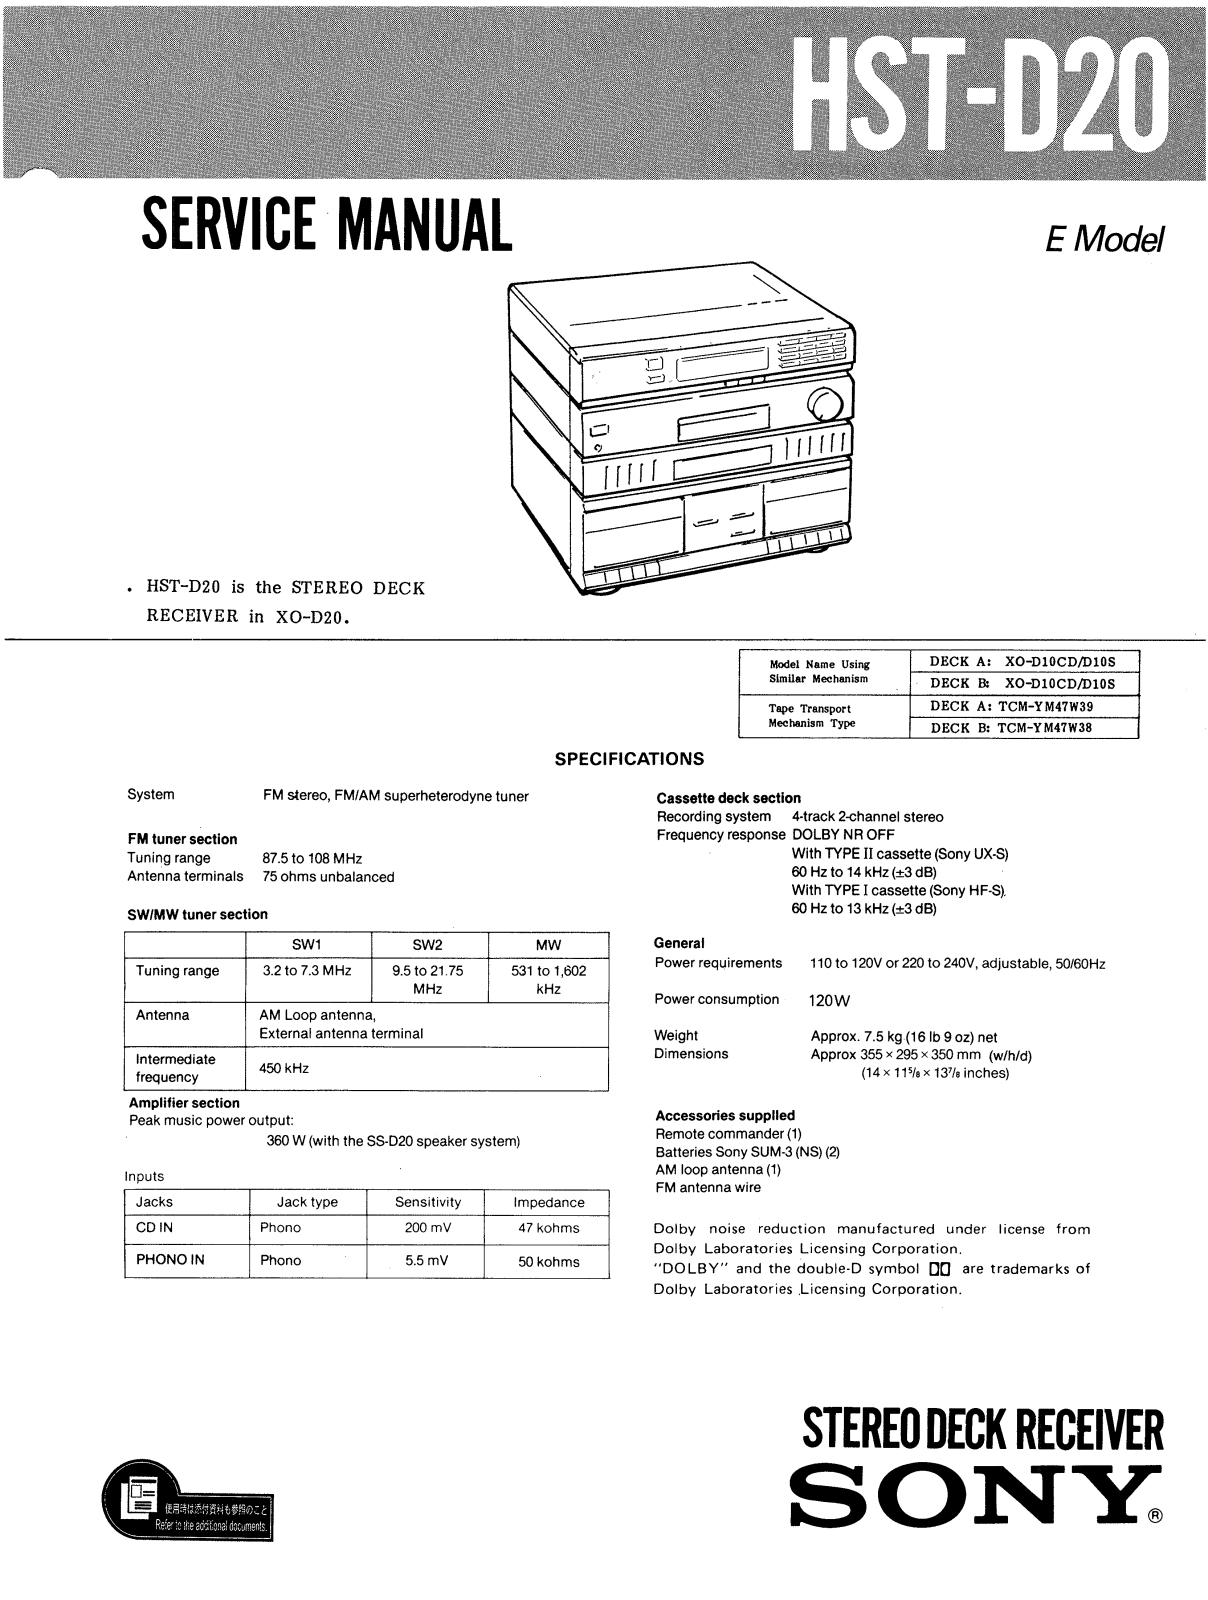 Sony HSTD-20 Service manual